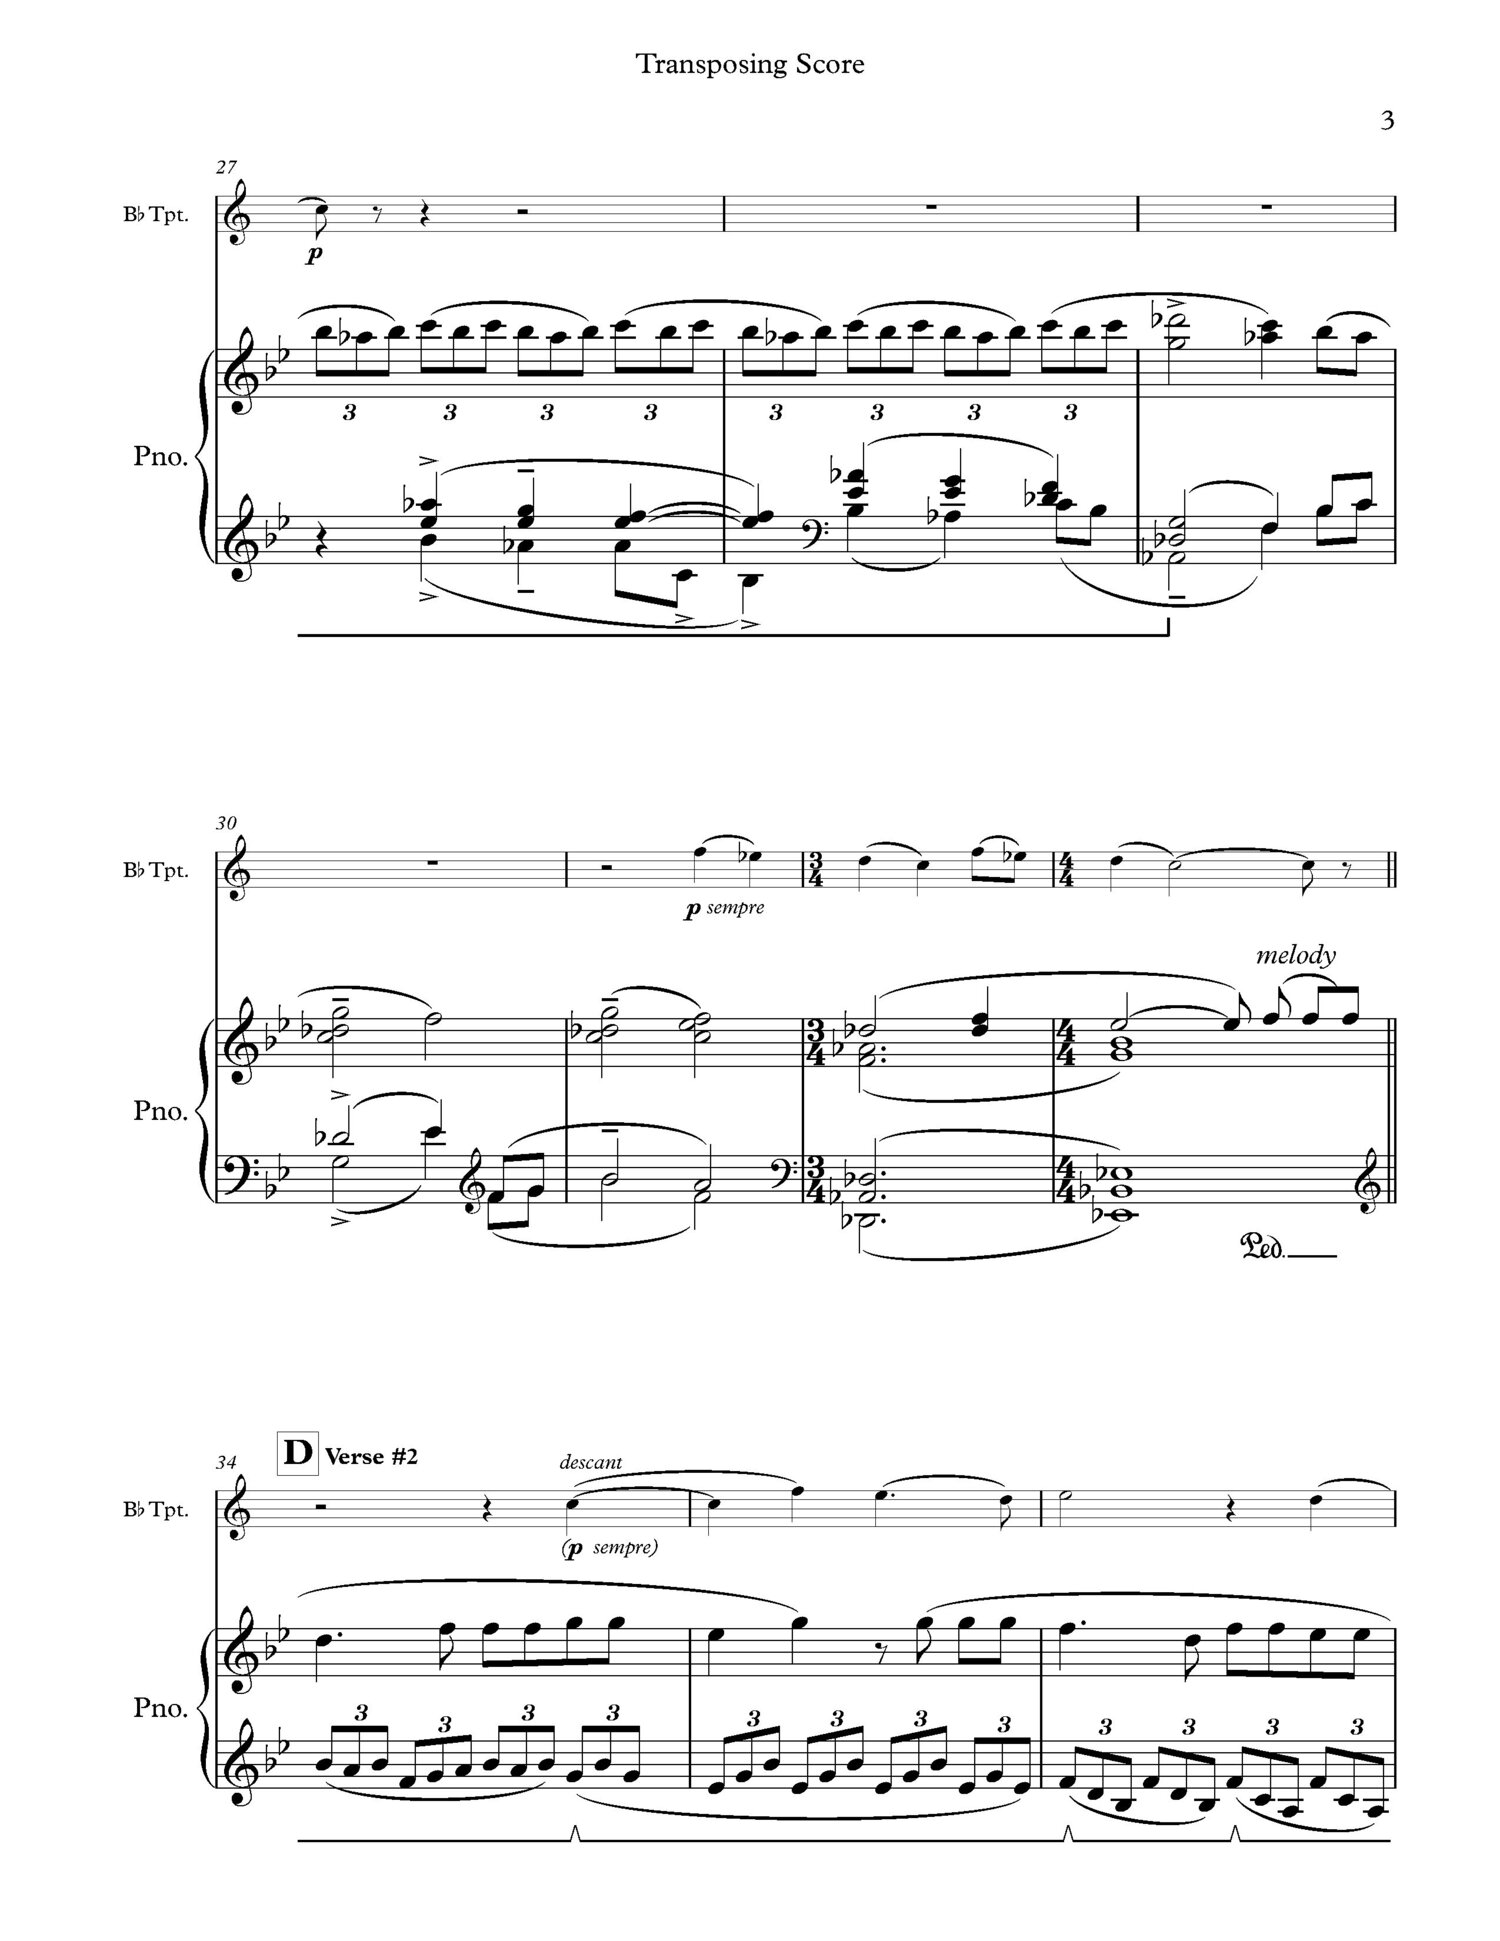 How Great Thou Art - Sheet Music for Solo Piano